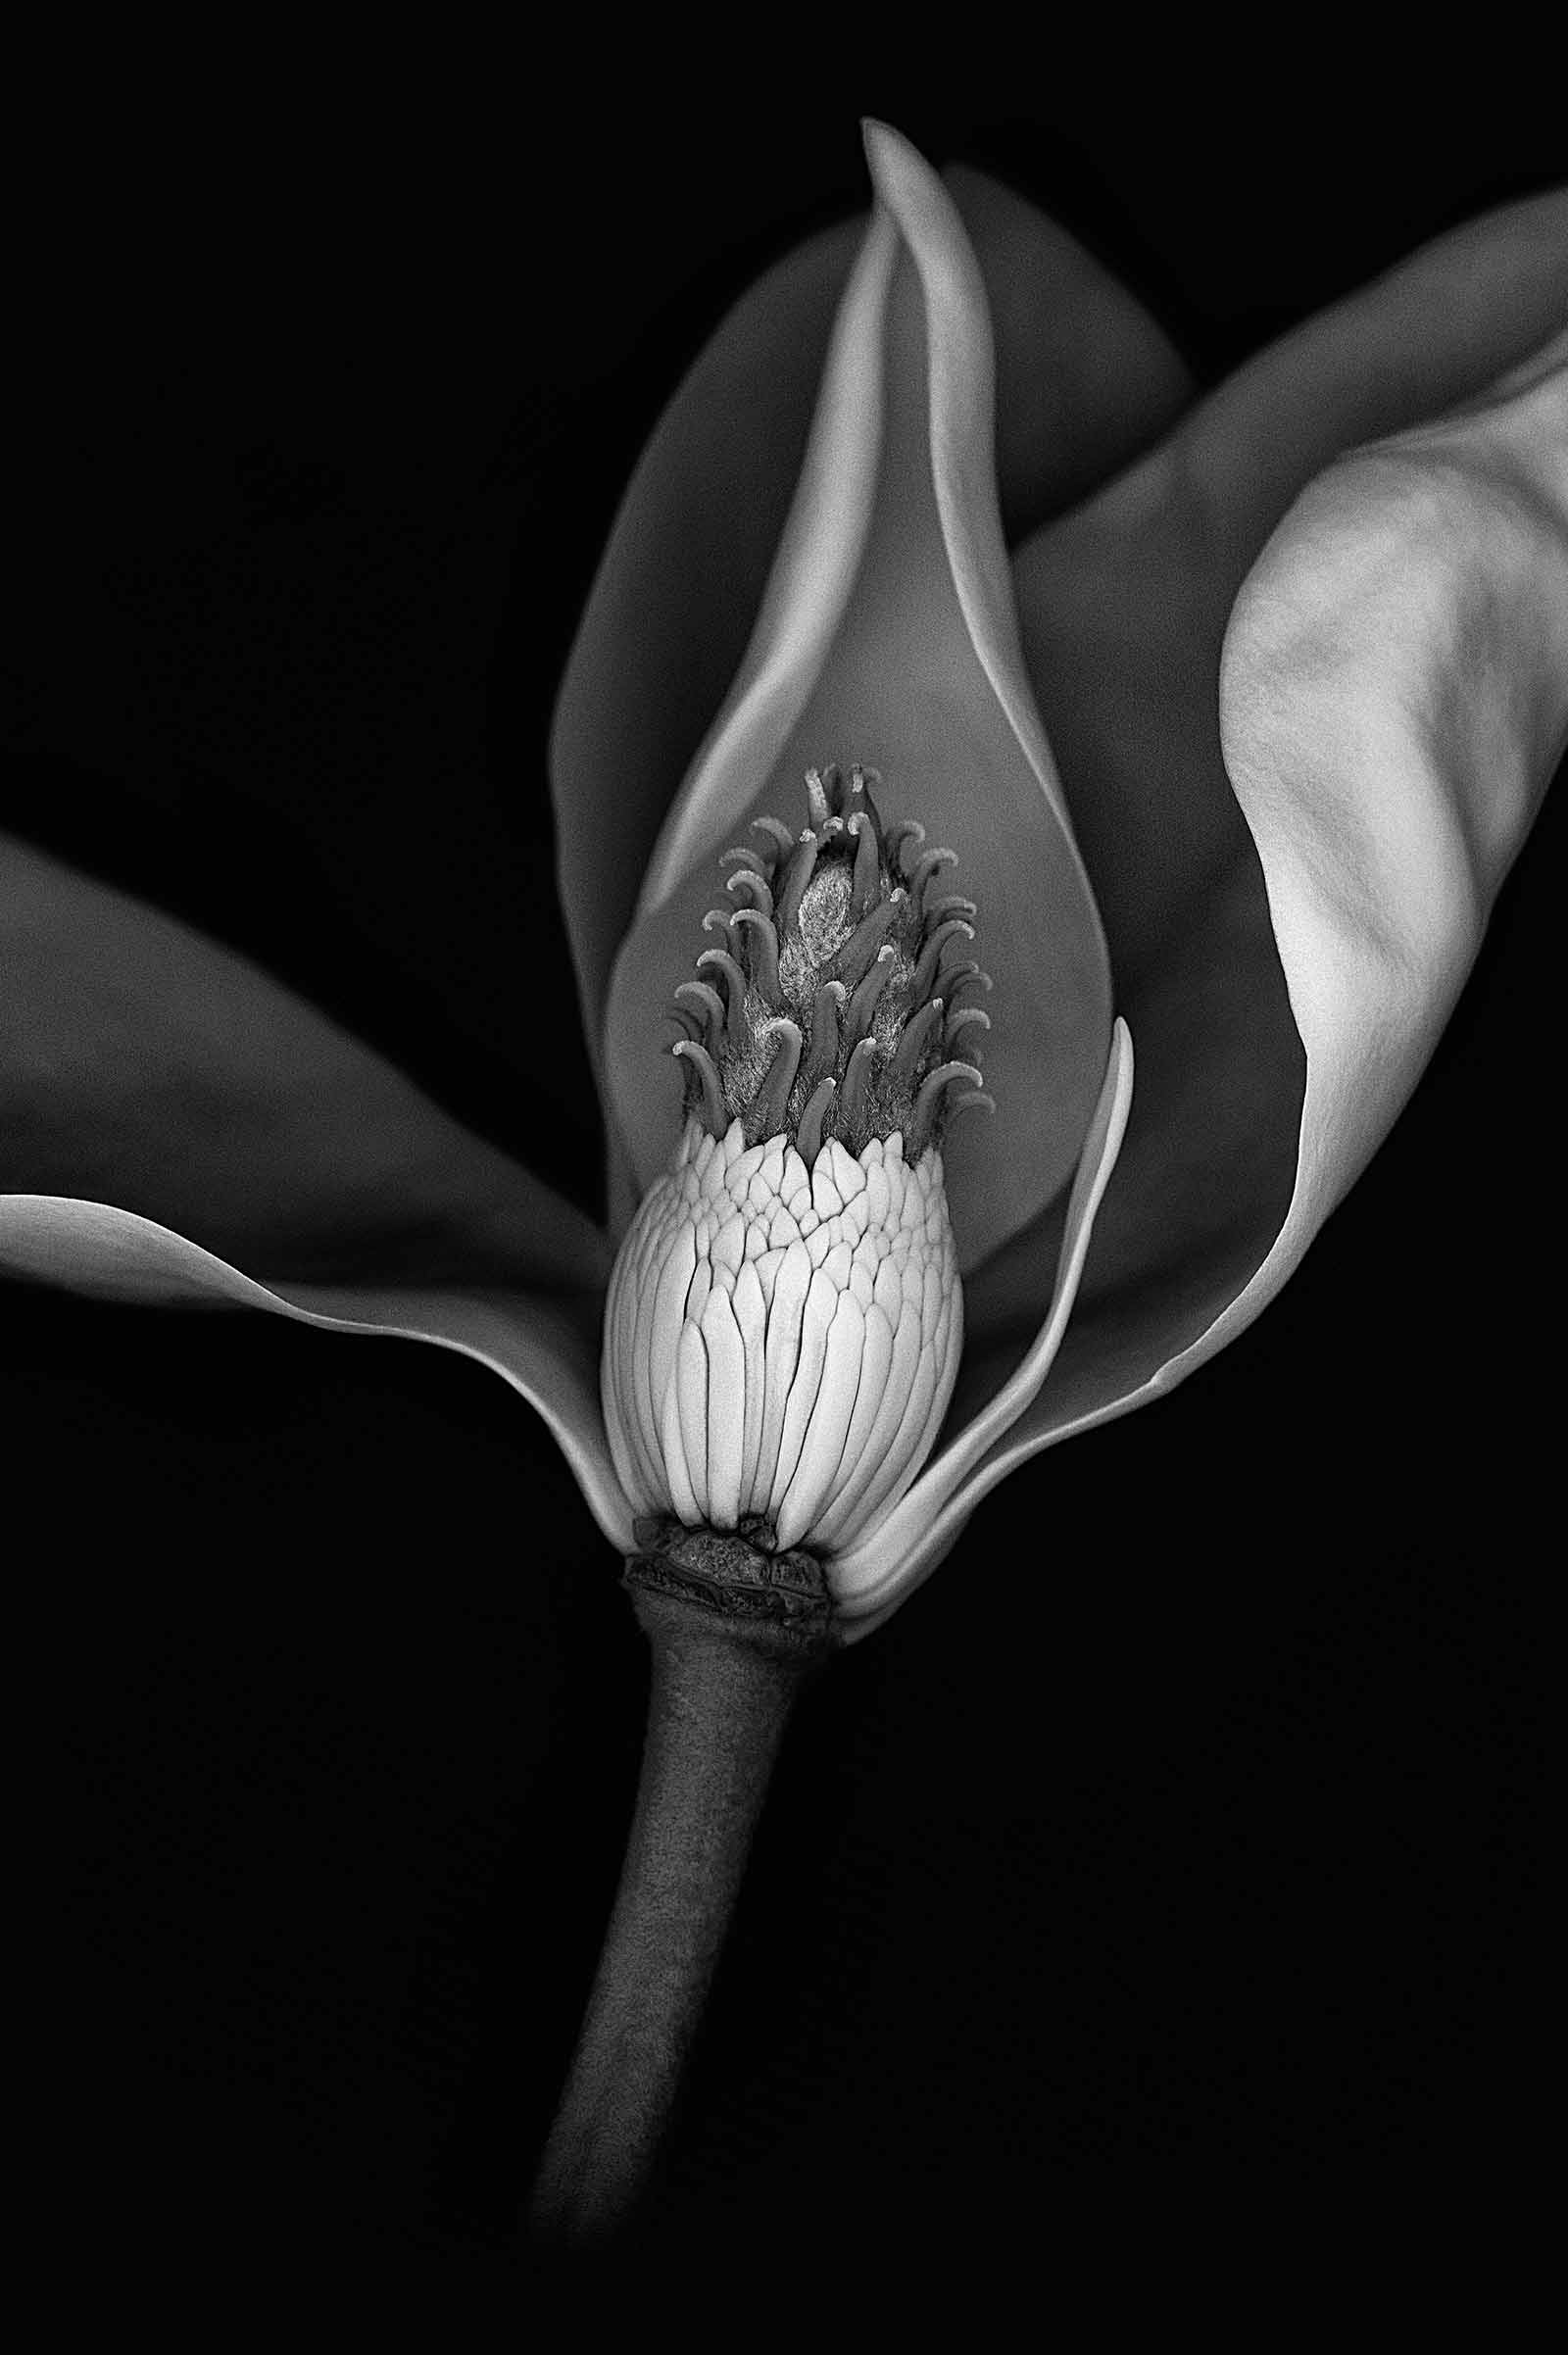 magnolia scanography black and white photography karen visser artist